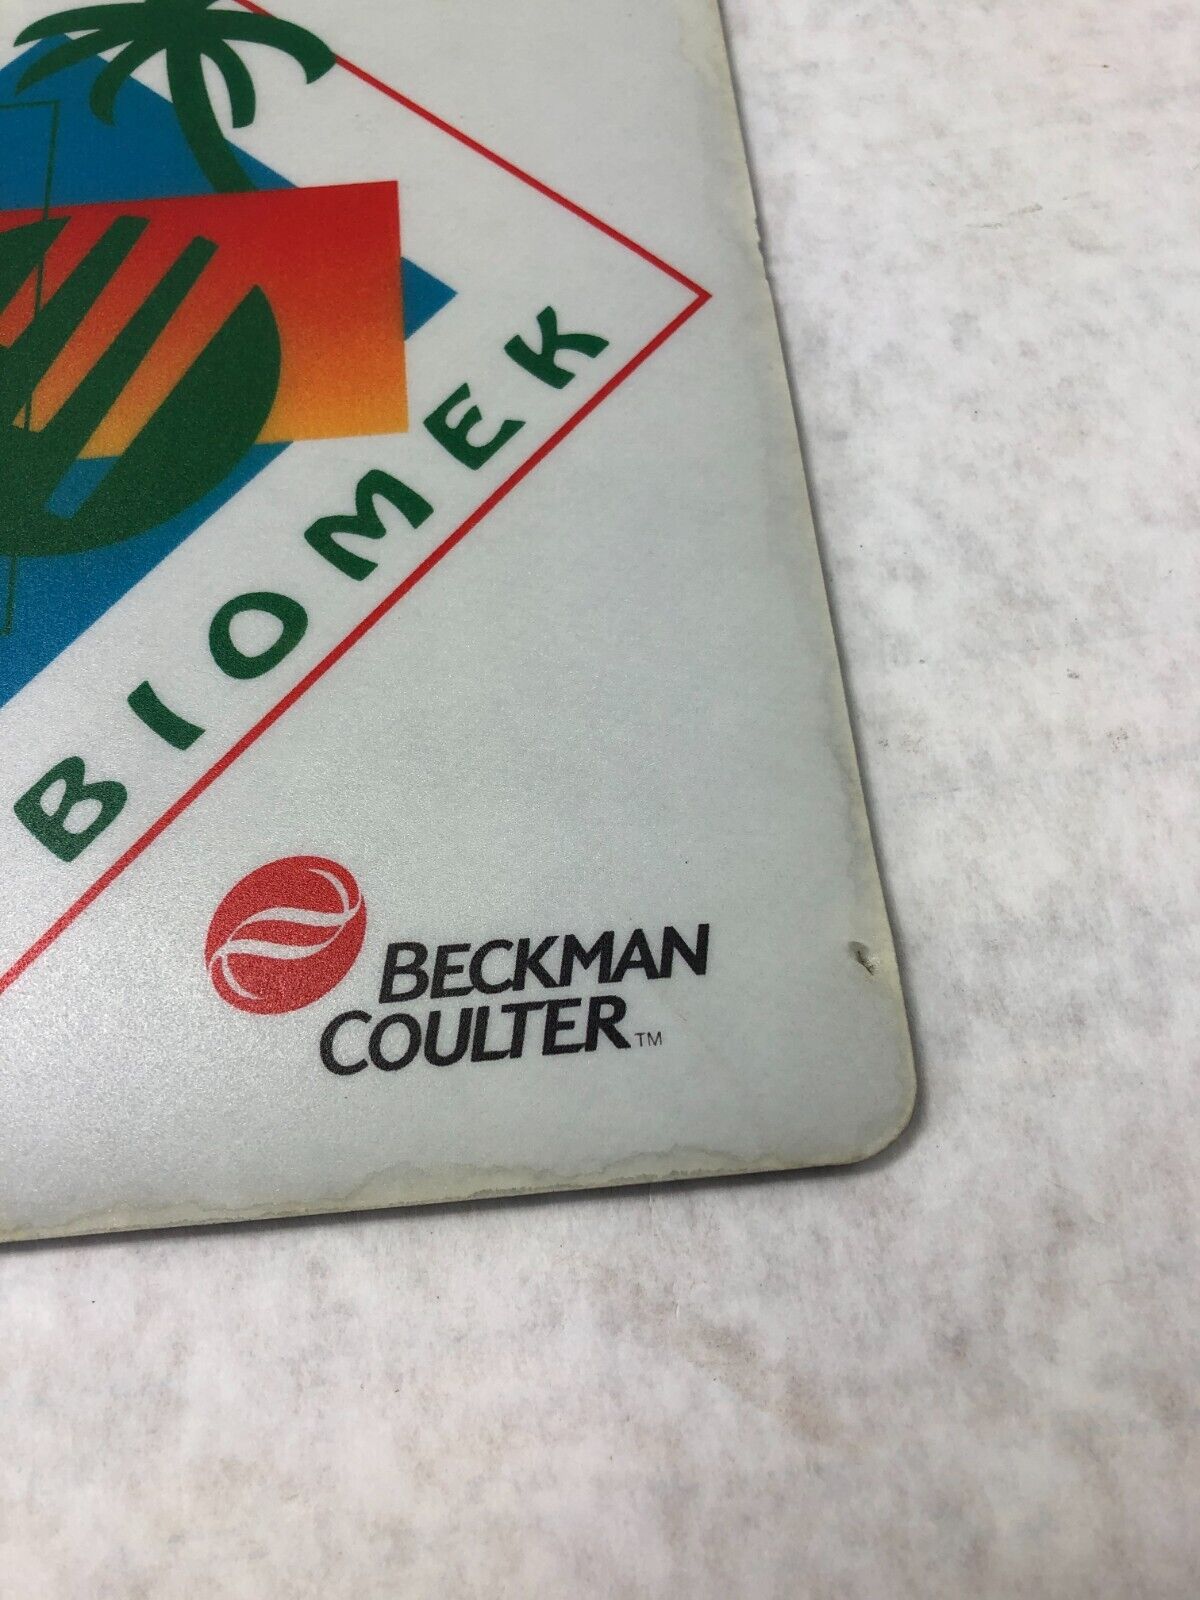 Beckman Coulter Club Biomek Mousepad Promotional